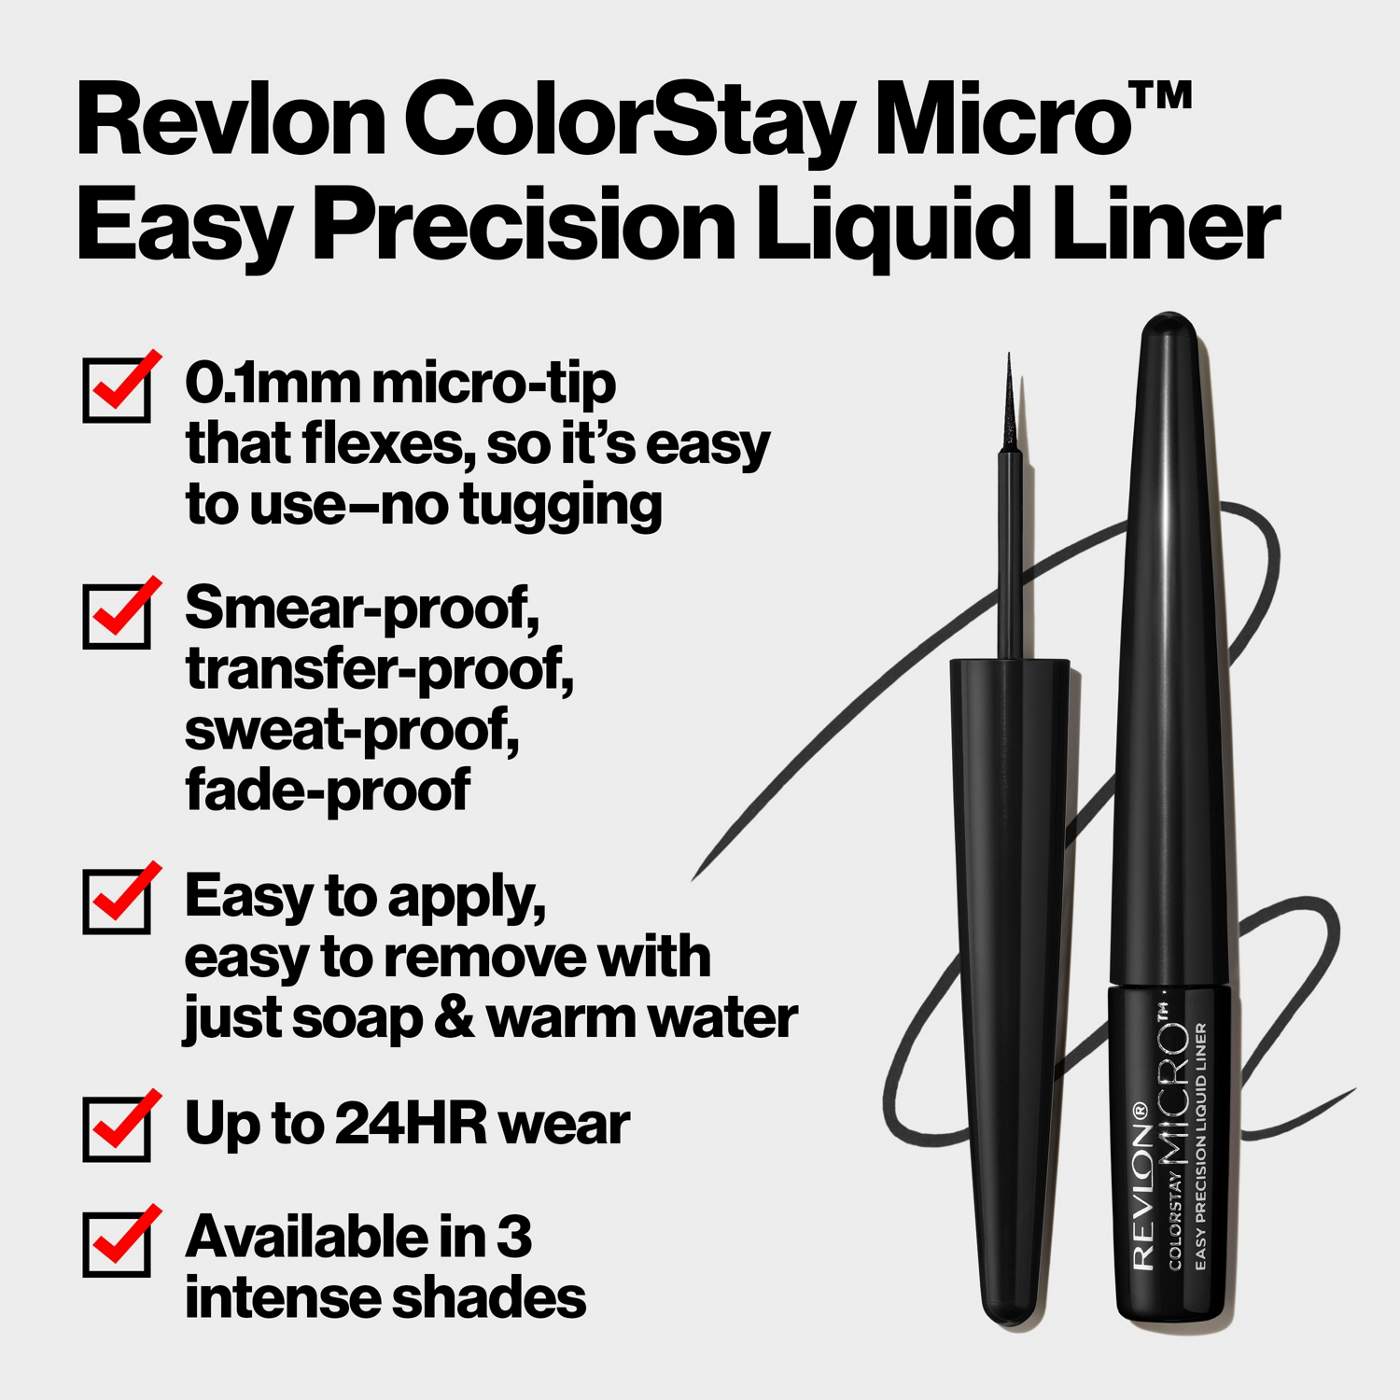 Revlon ColorStay Micro Liquid Liner - What The Fudge; image 8 of 9